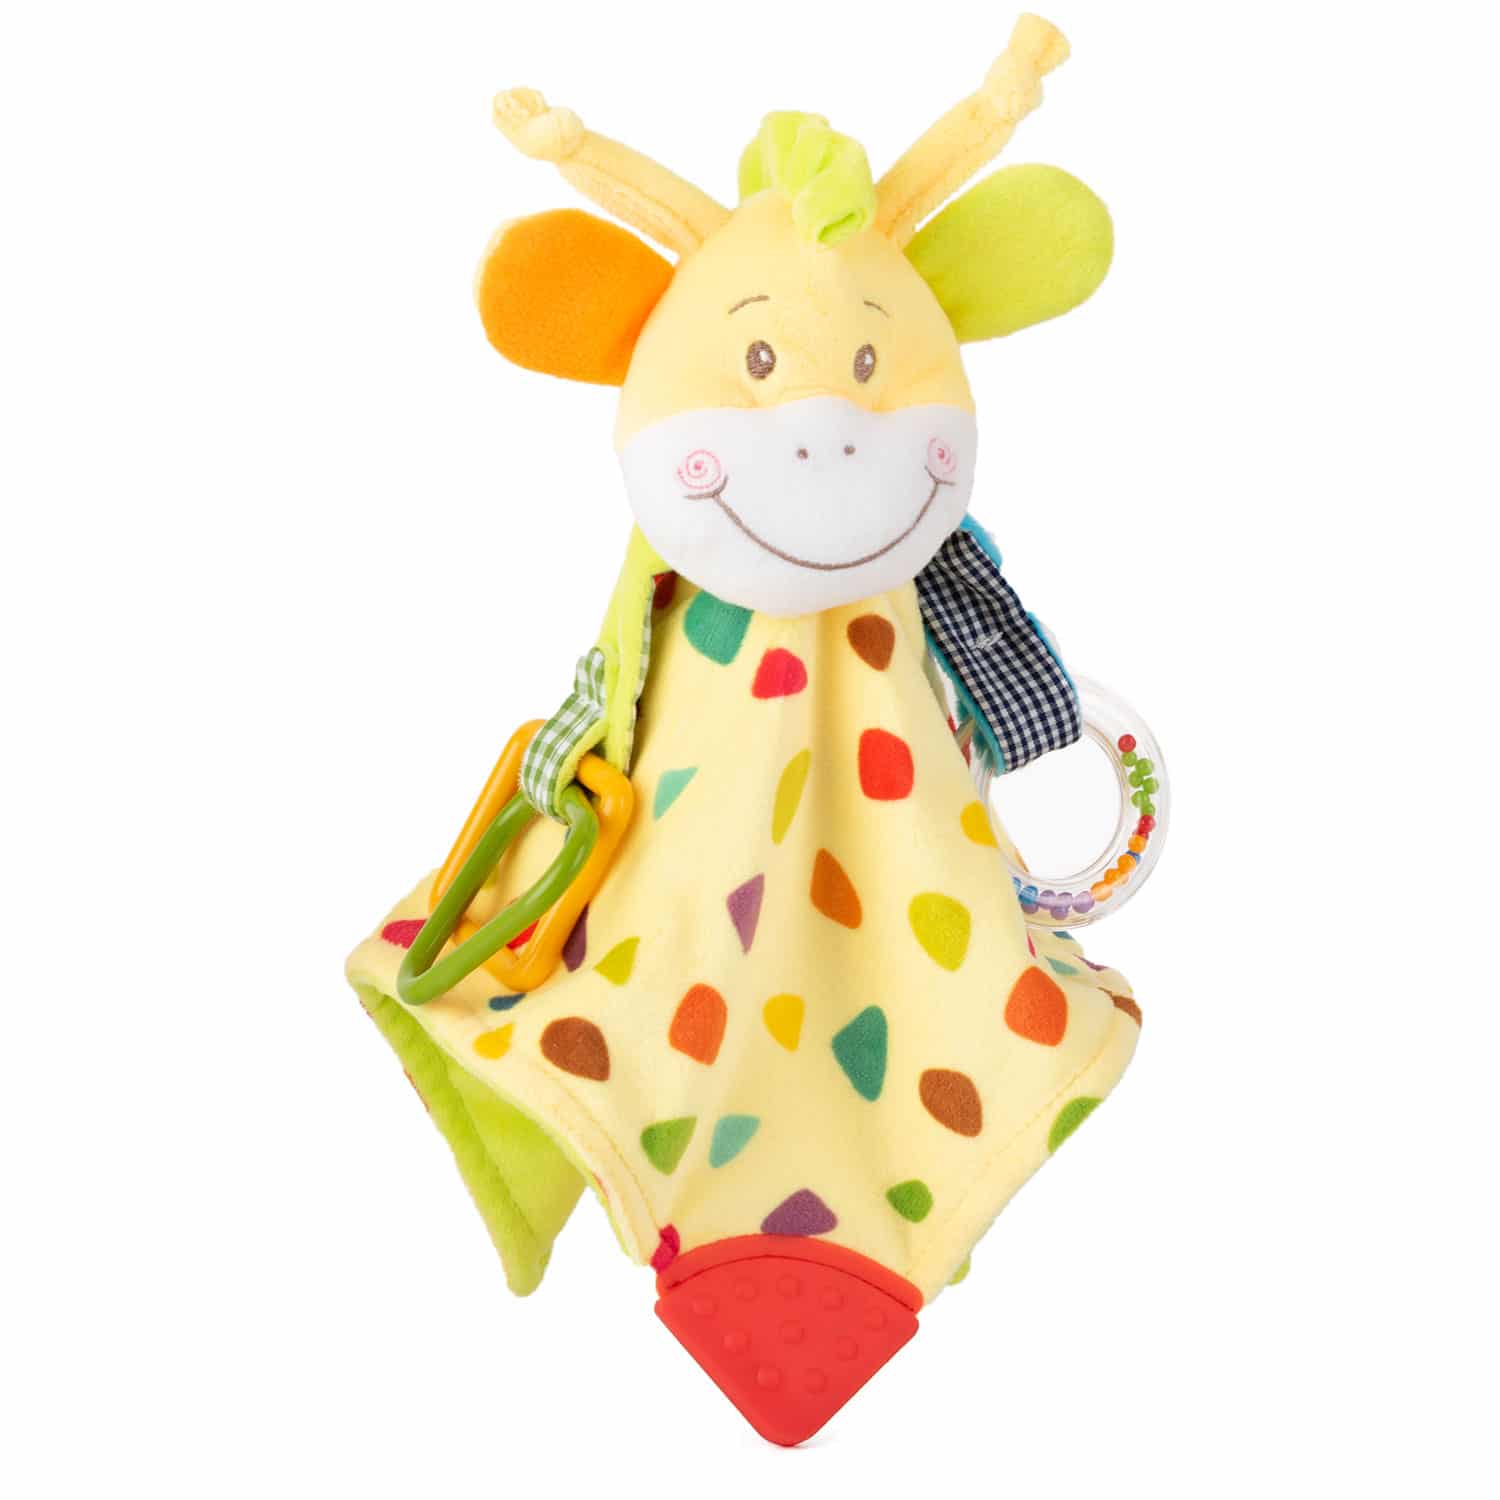 Soft toy for cuddling Giraffe